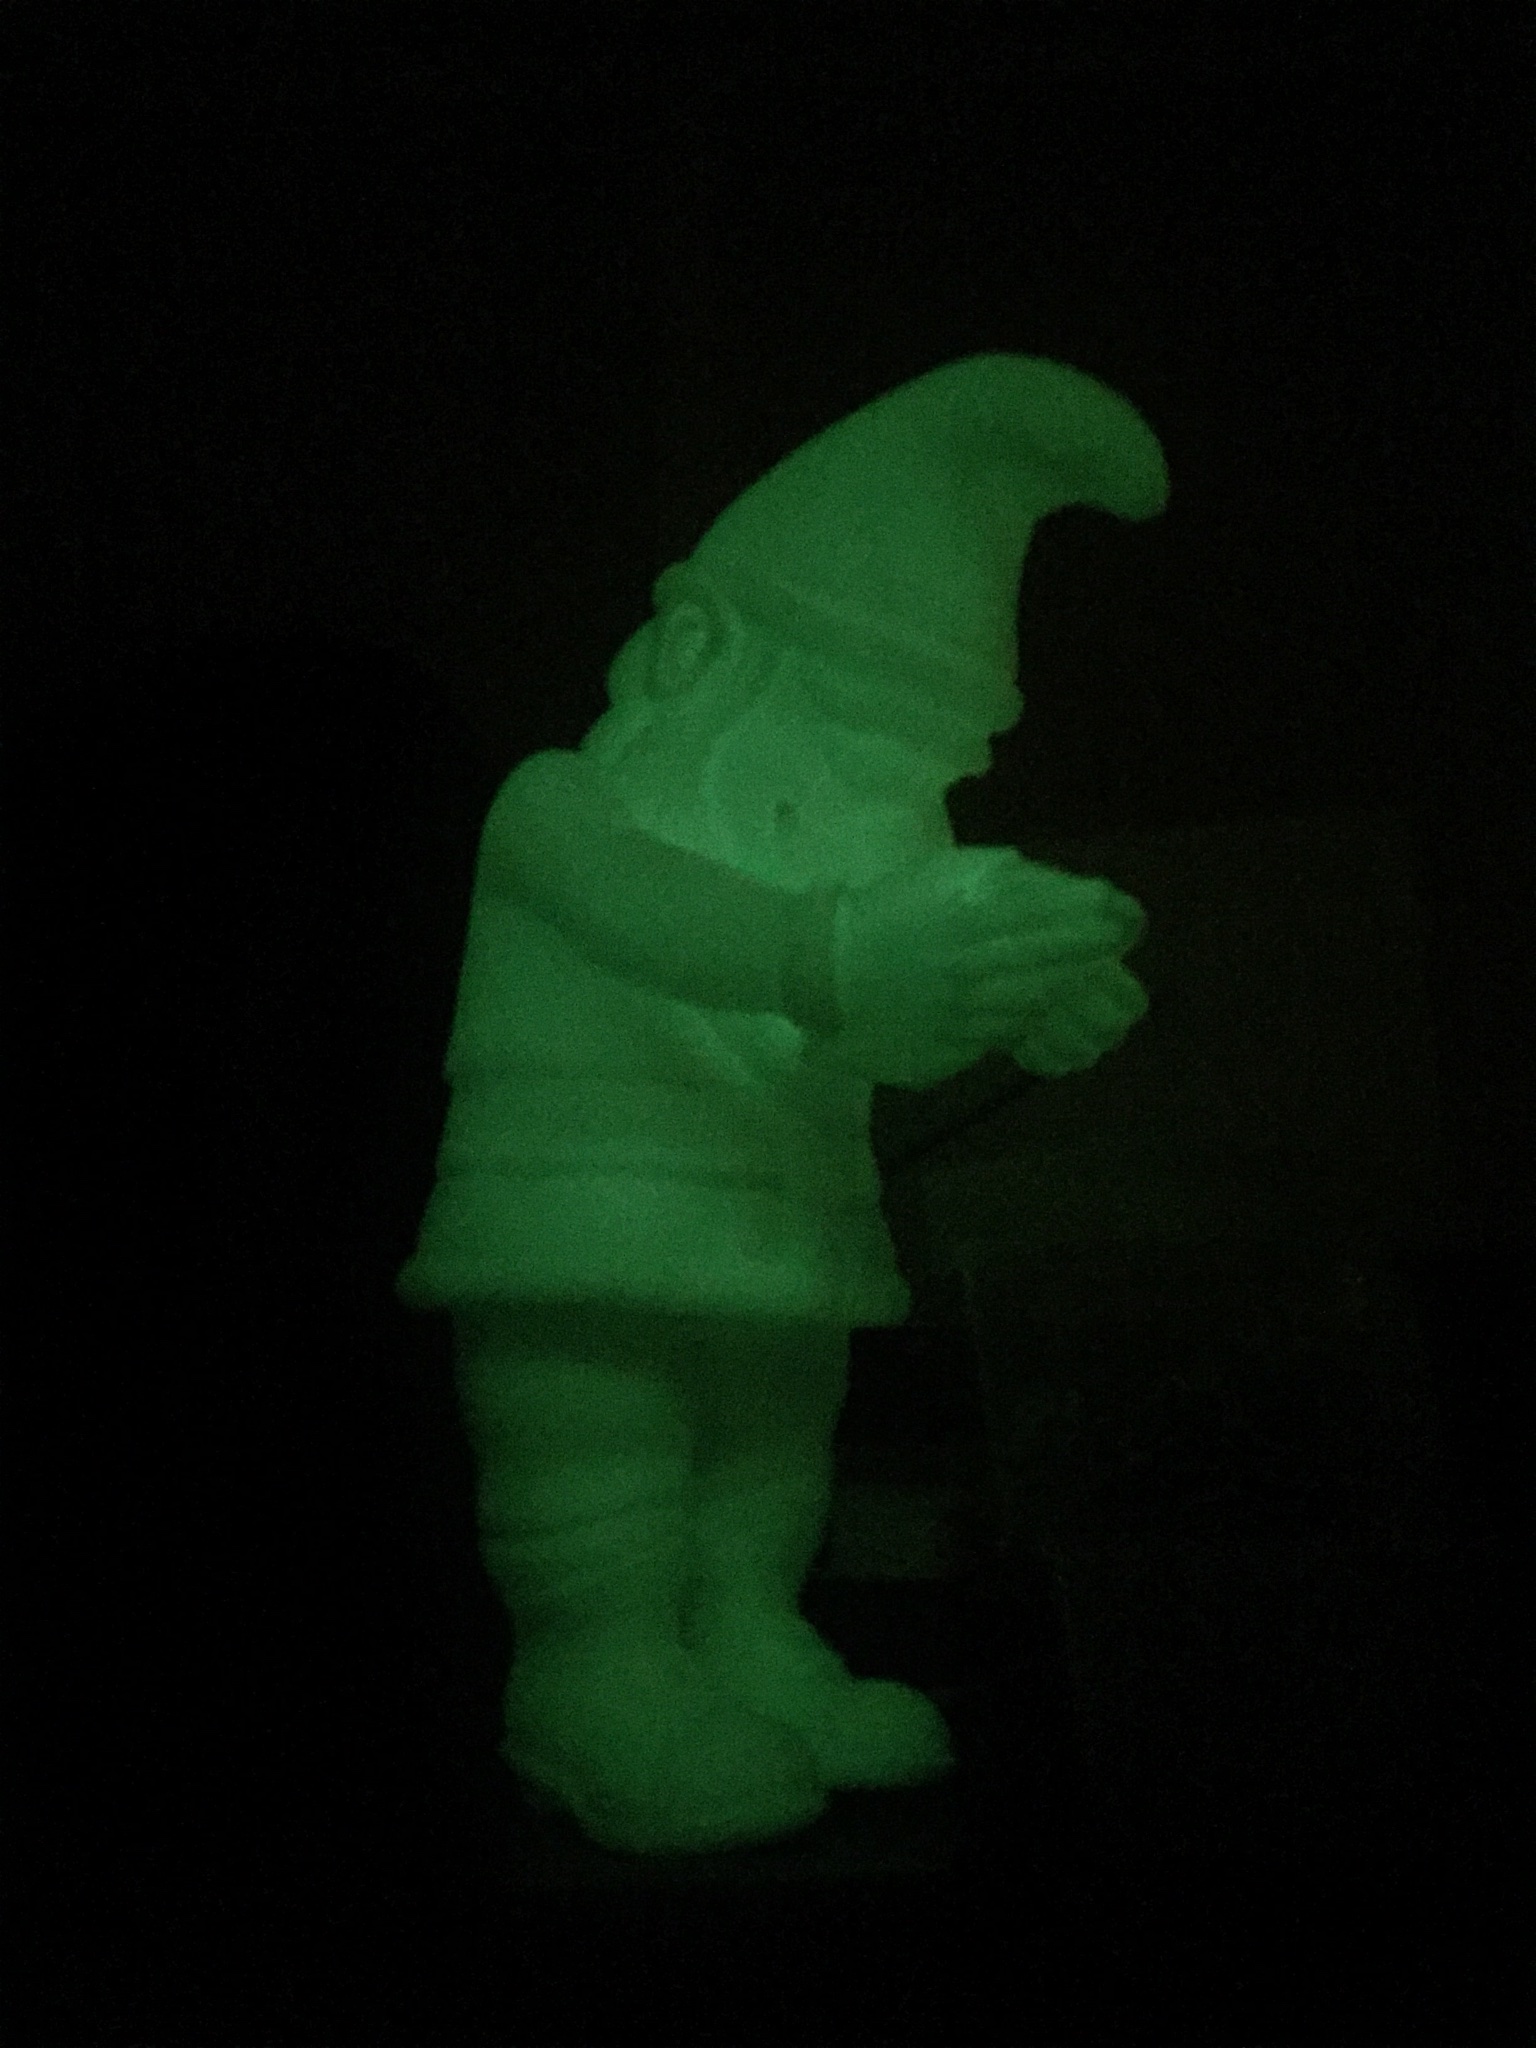 A glow-in-the-dark garden gnome